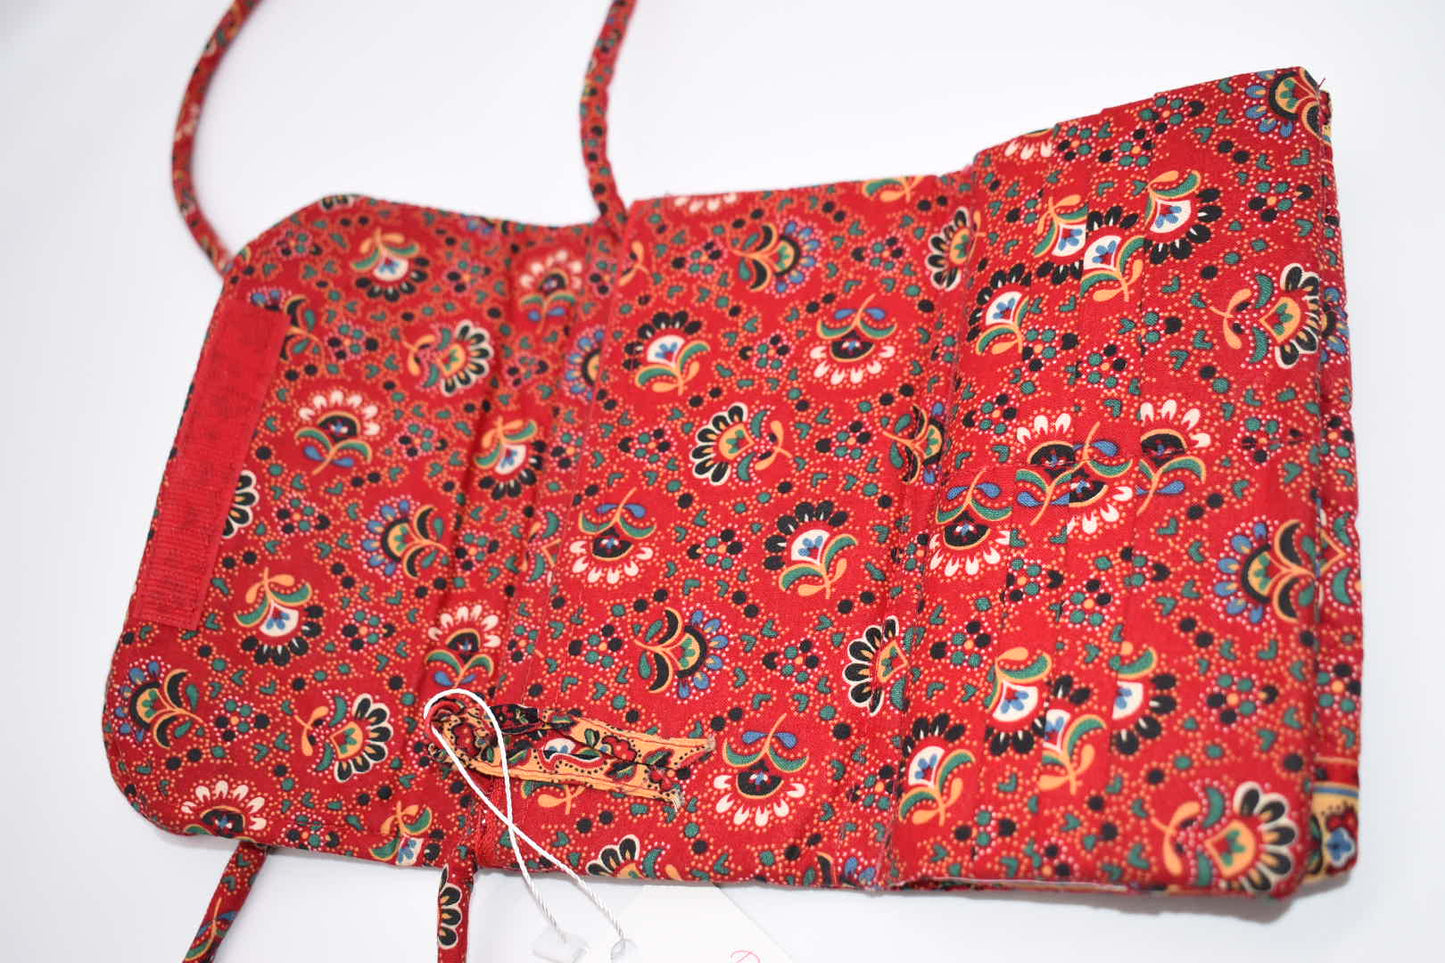 Vintage Vera Bradley Strap Wallet/ Crossbody in "Colette Red" Pattern